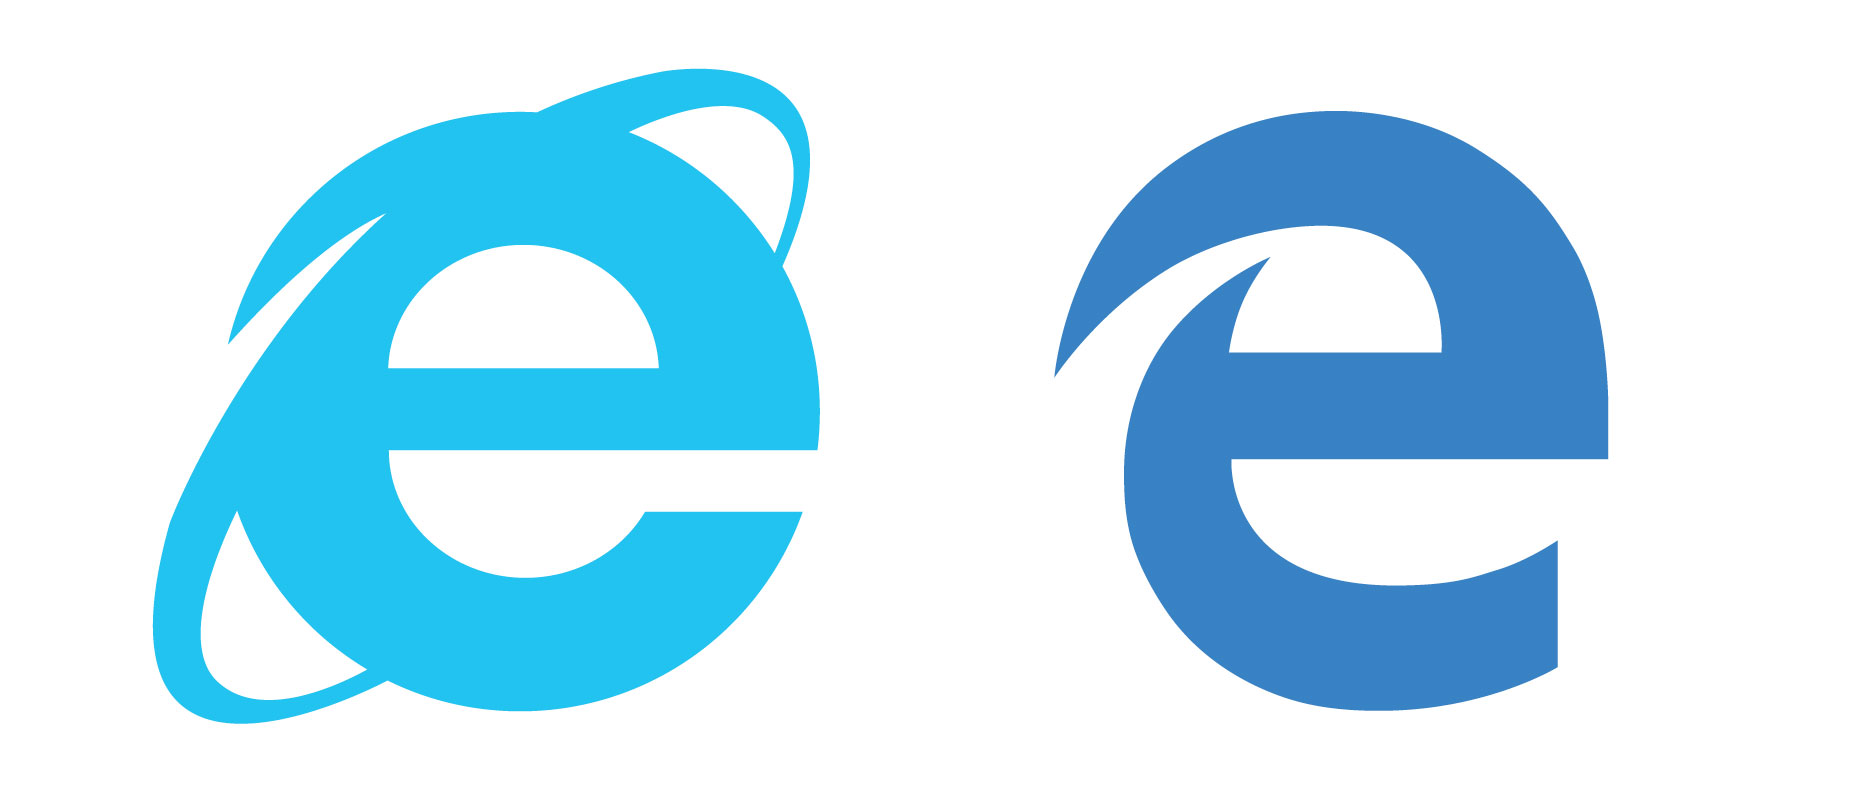 Internet Explorer and Microsoft Edge logos